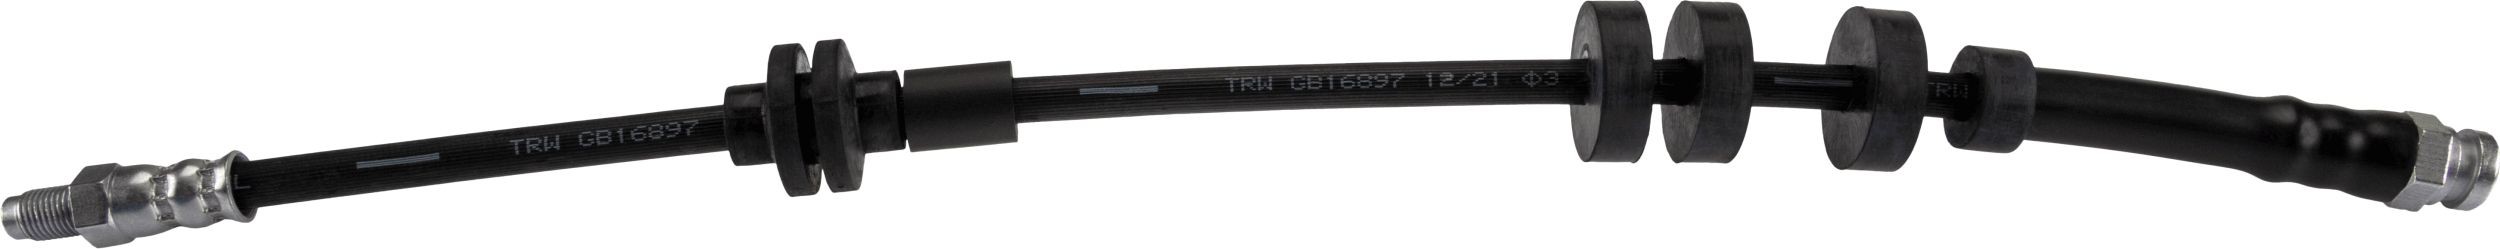 TRW 472 mm, M10x1, Buitendraad, Binnendraad Lengte: 472mm, Schroefdraadmaat 1: M10x1, Schroefdraadmaat 2: M10x1 Remslang PHB450 koop goedkoop